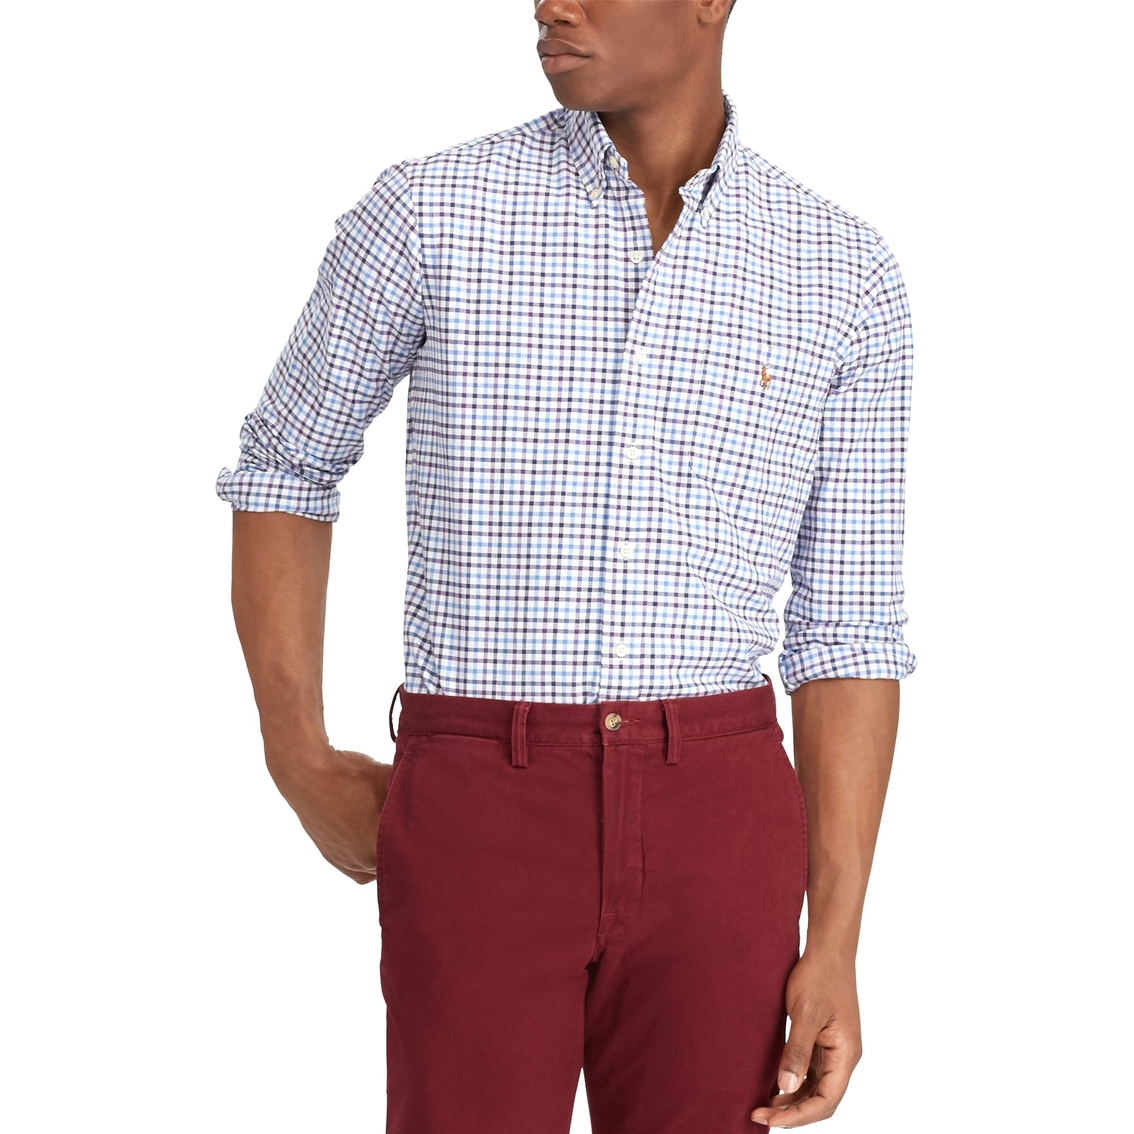 Polo Ralph Lauren Classic Fit Plaid Oxford Shirt | Shirts | Clothing